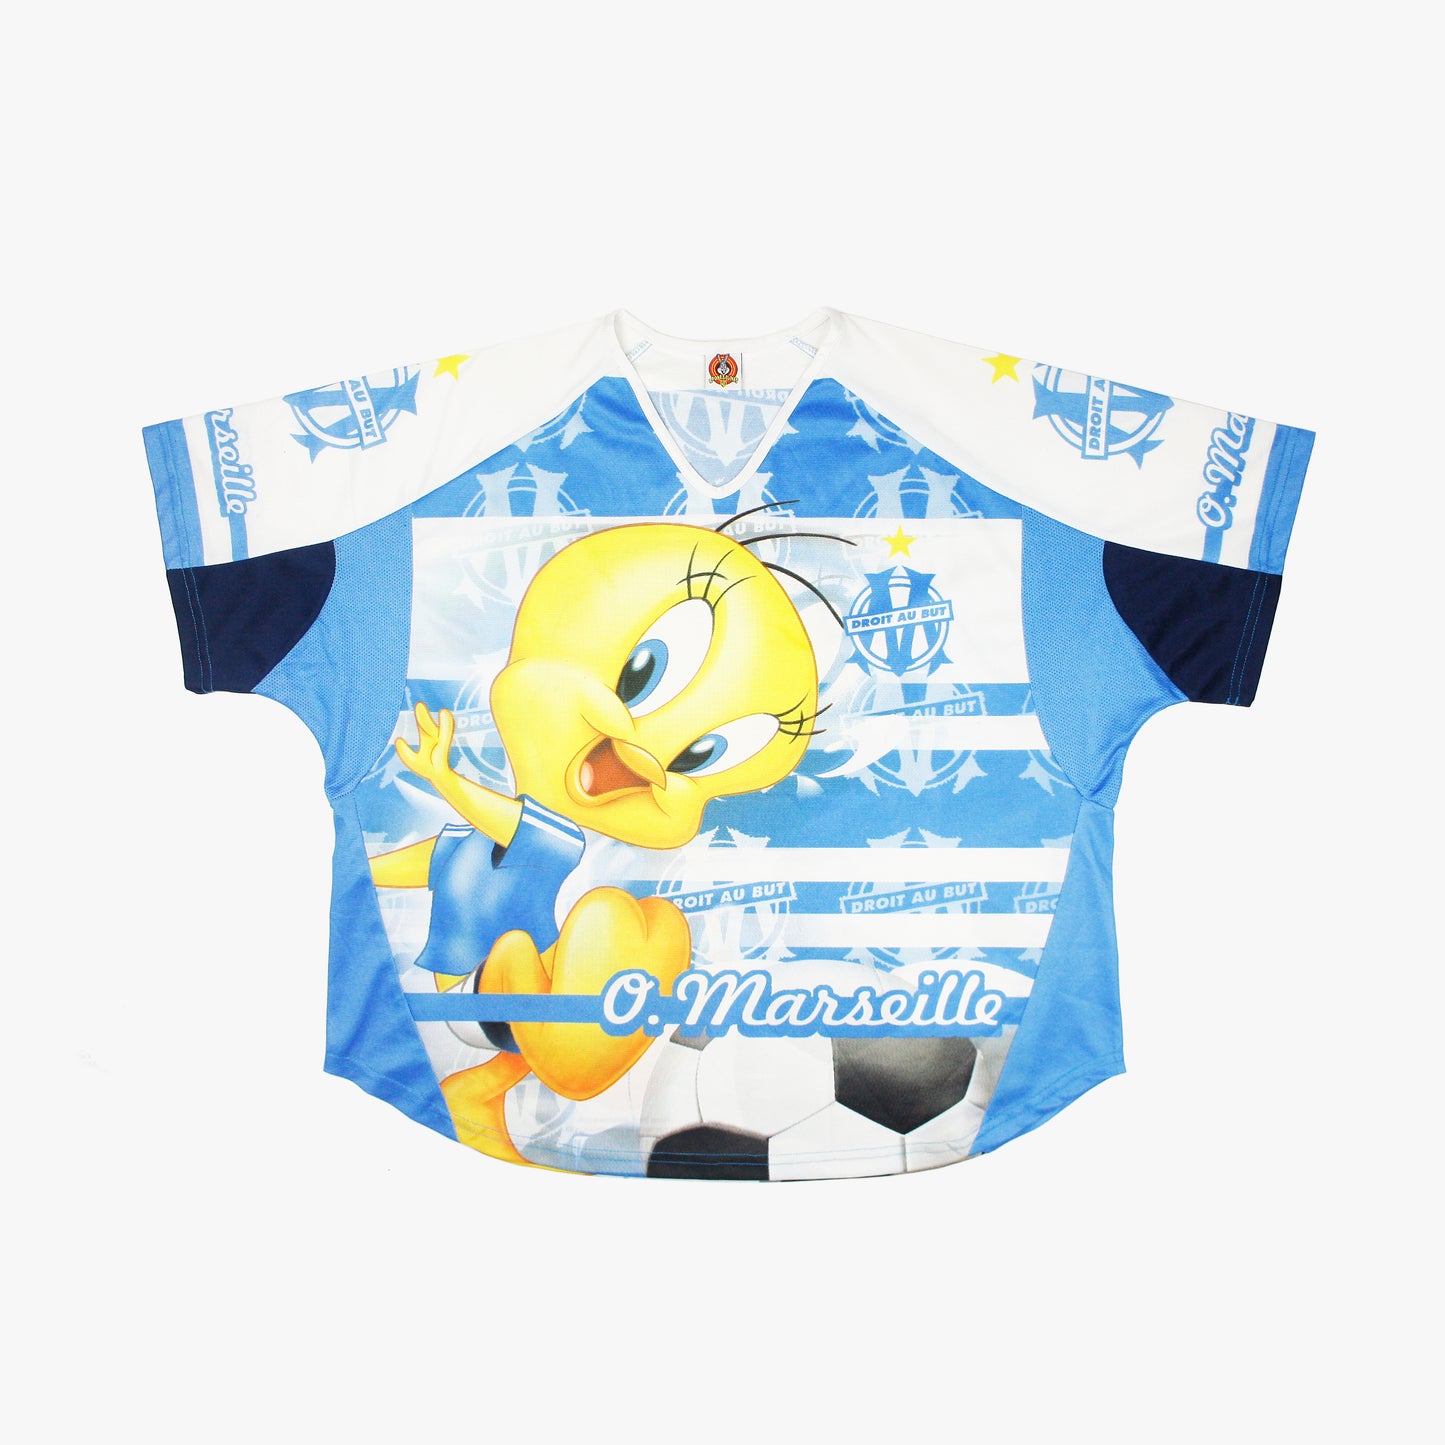 Marsella 01/02 • Looney Tunes Camiseta Promocional • M